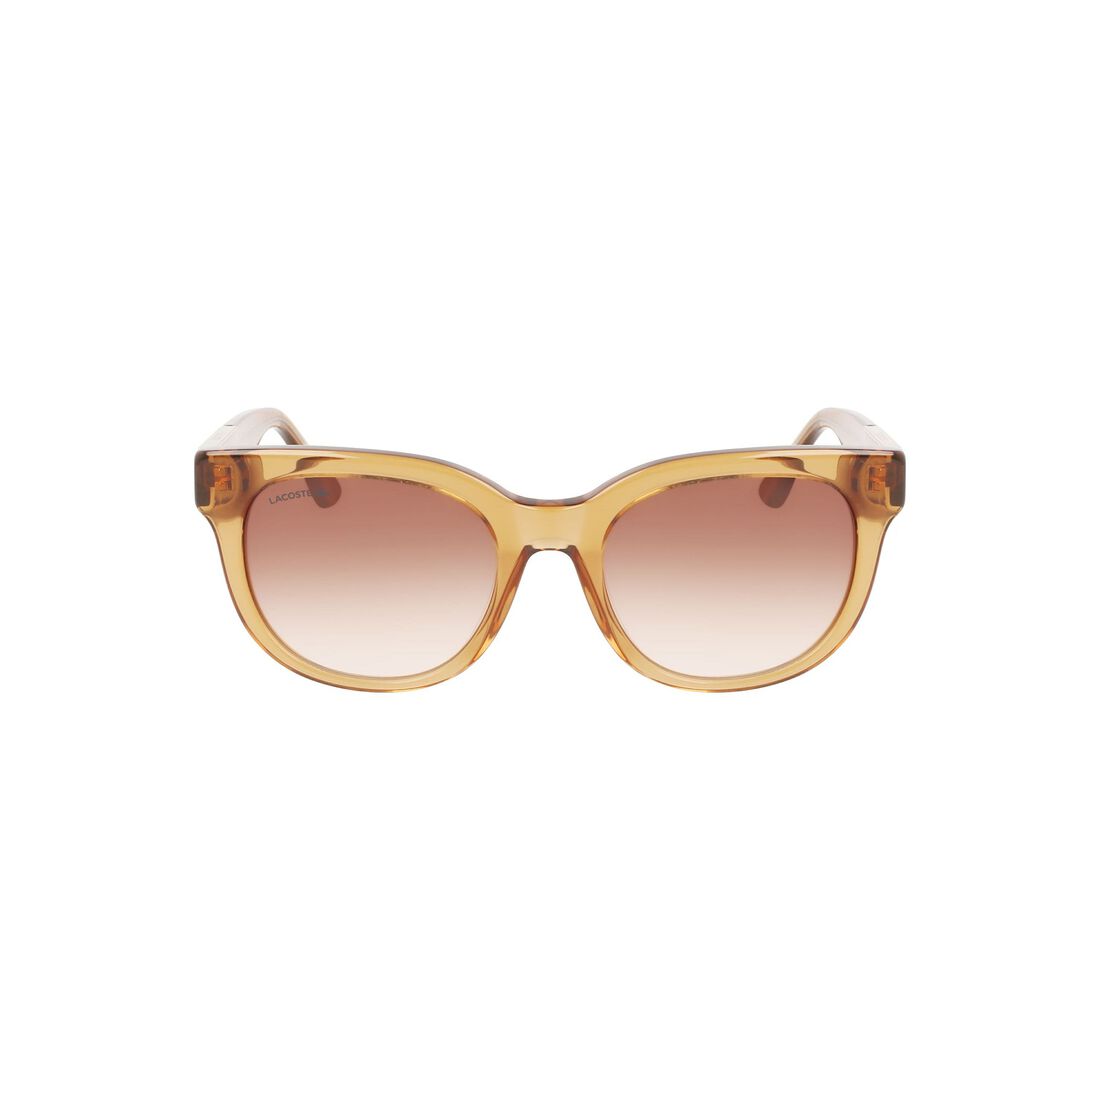 Women's Oval Acetate Croco Skin Sunglasses